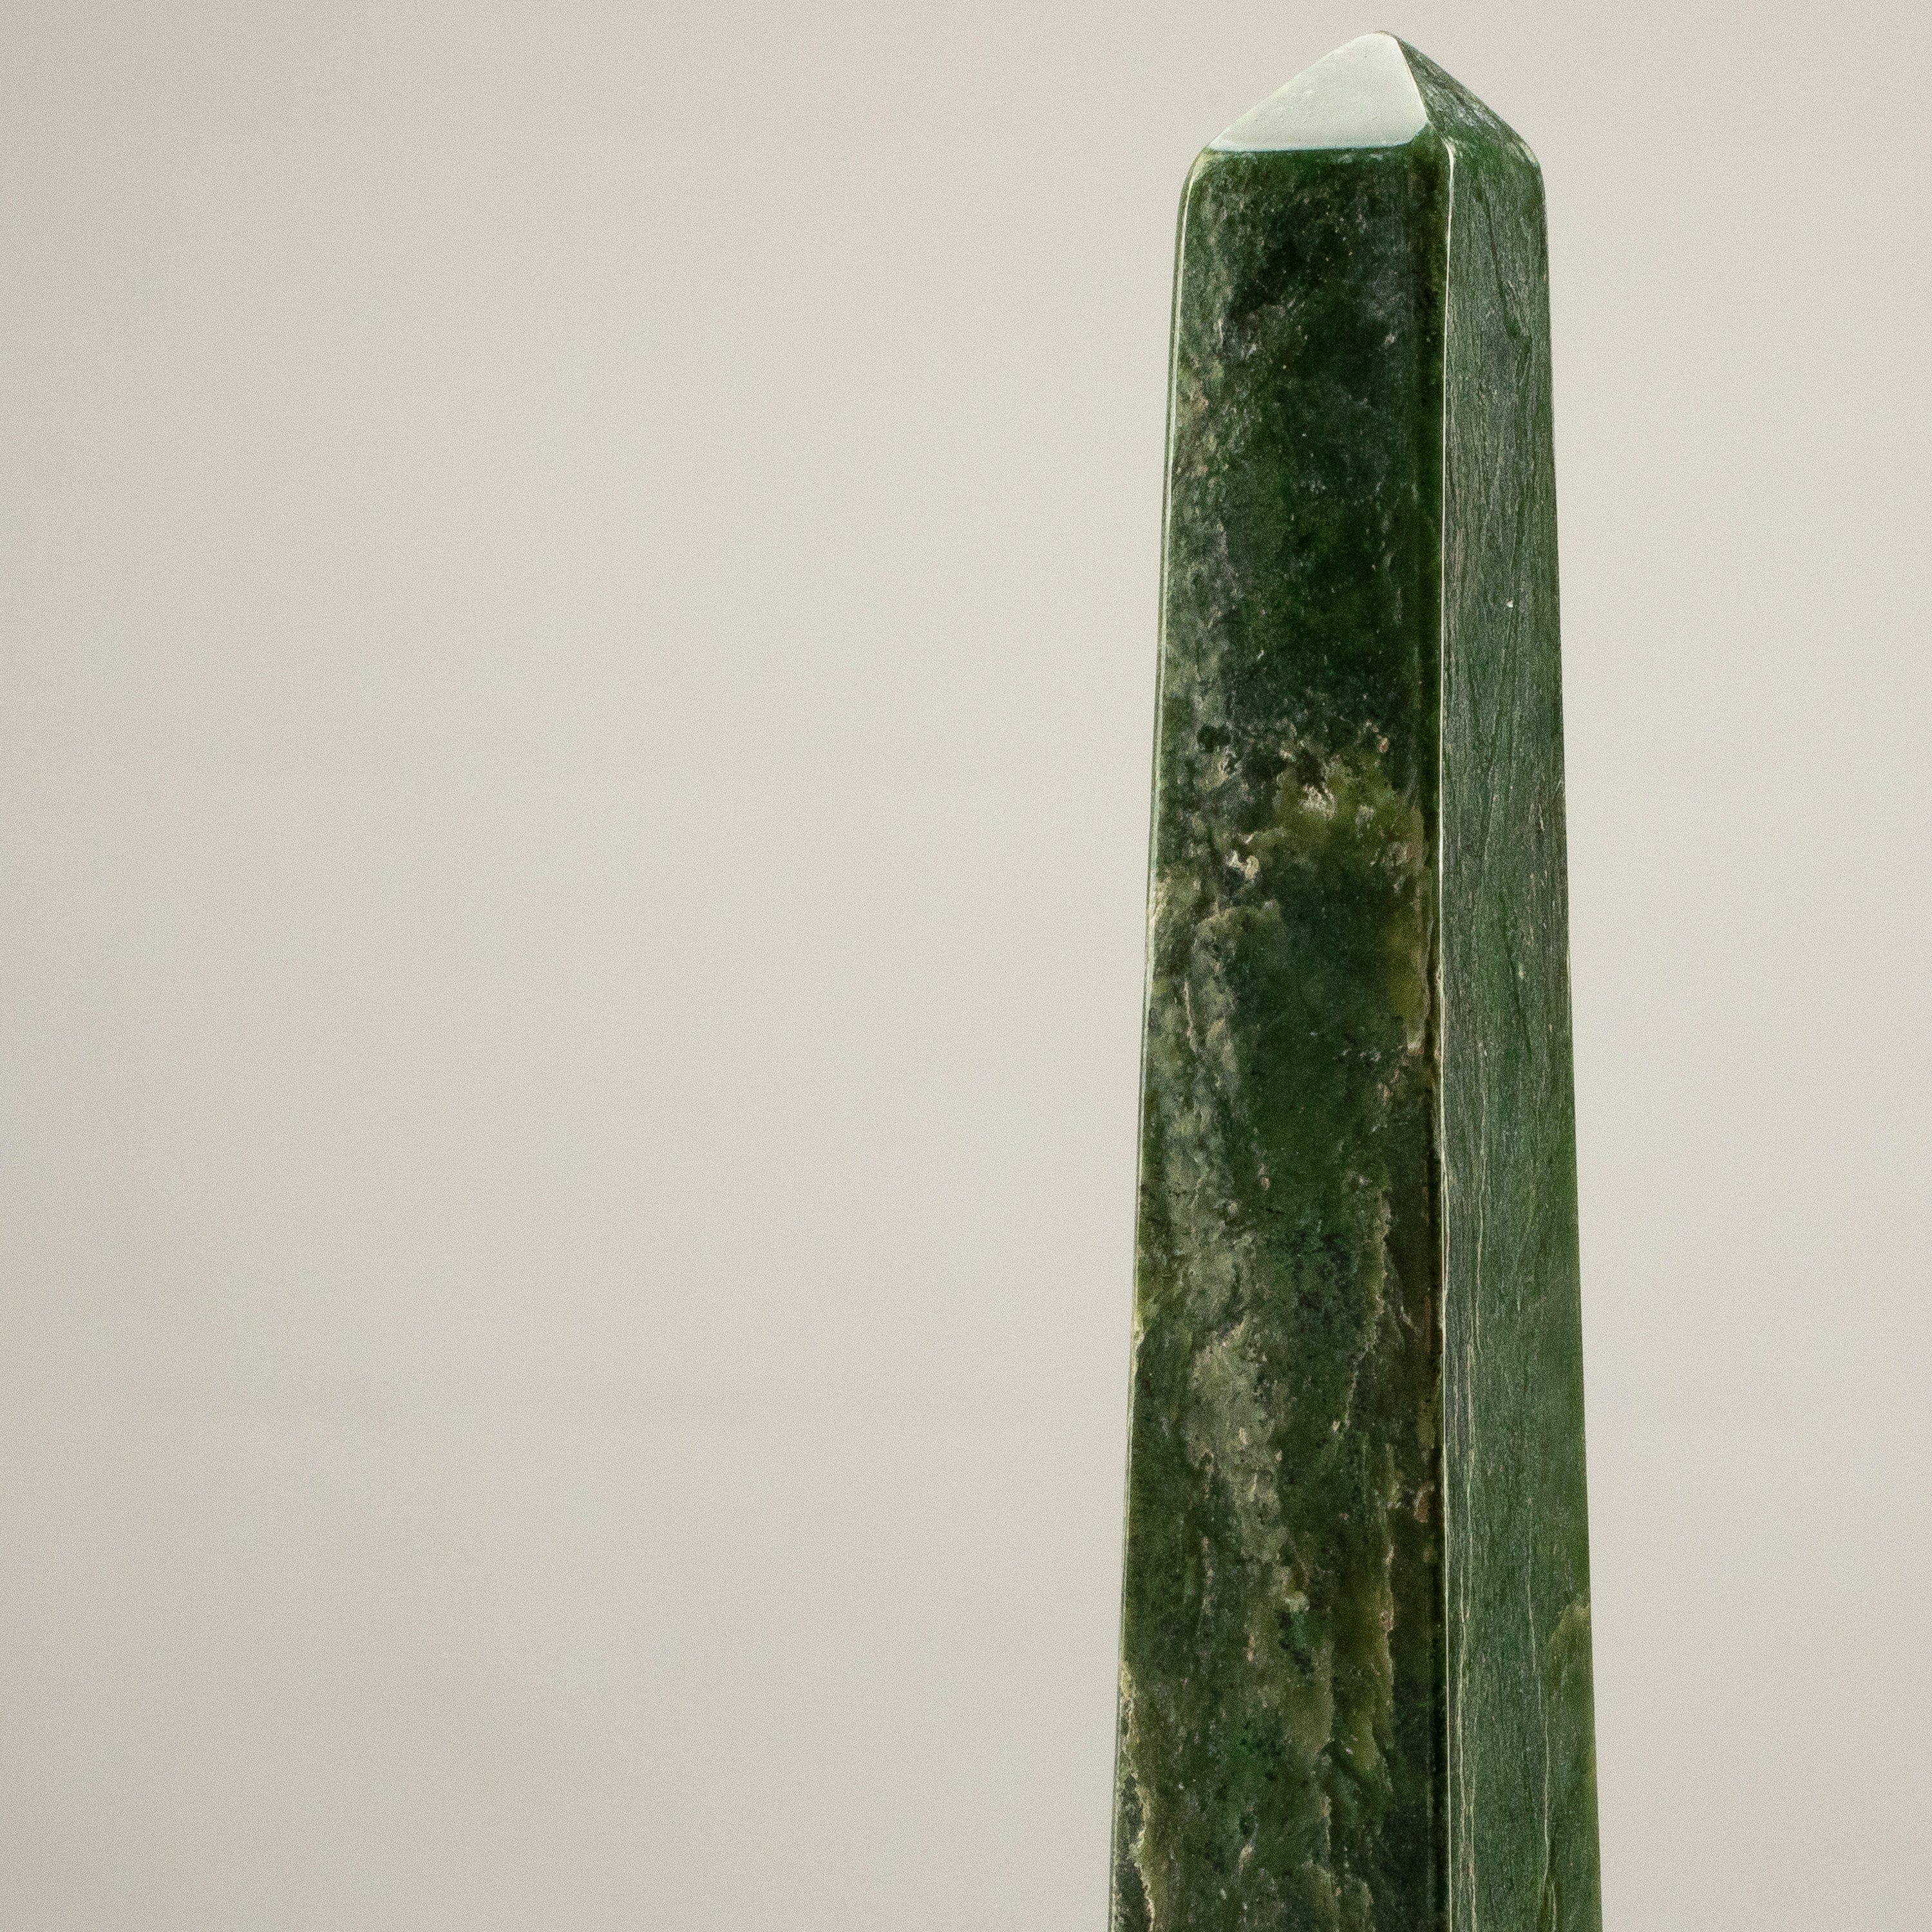 Kalifano Nephrite Jade Freeform Nephrite Jade Obelisk from Afghanistan - 16.5" / 6 lbs NJ2300.001